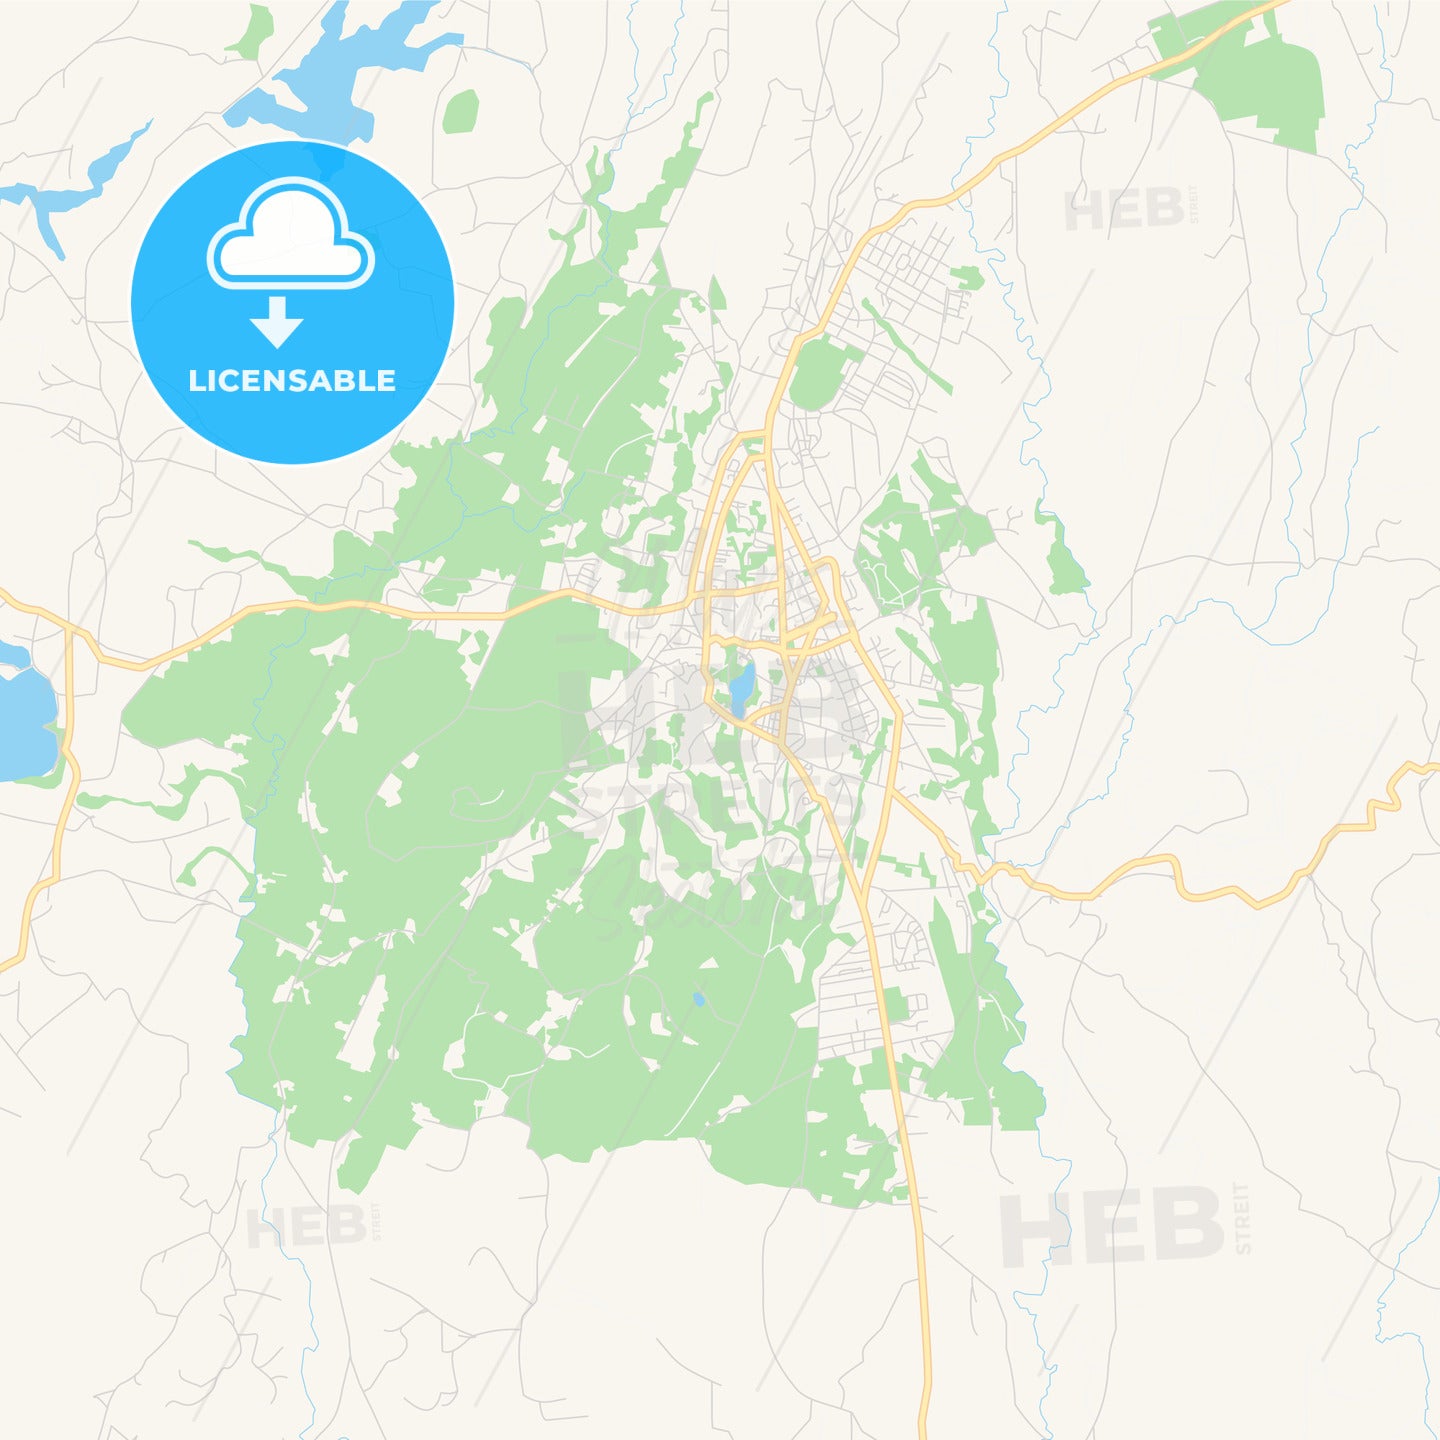 Printable street map of Antsirabe, Madagascar